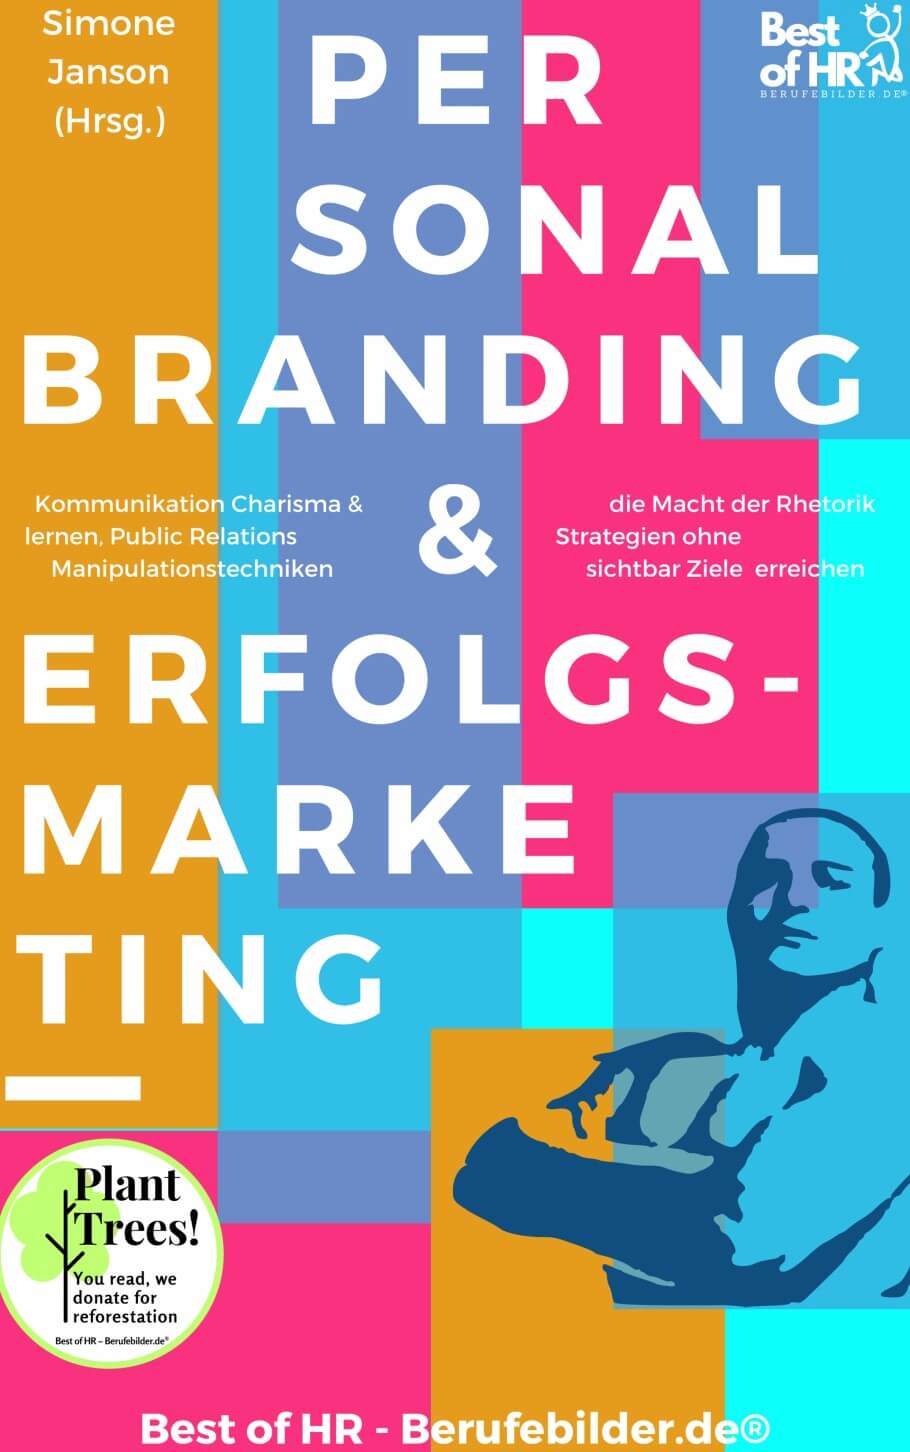 Personal Branding & Erfolgs-Marketing